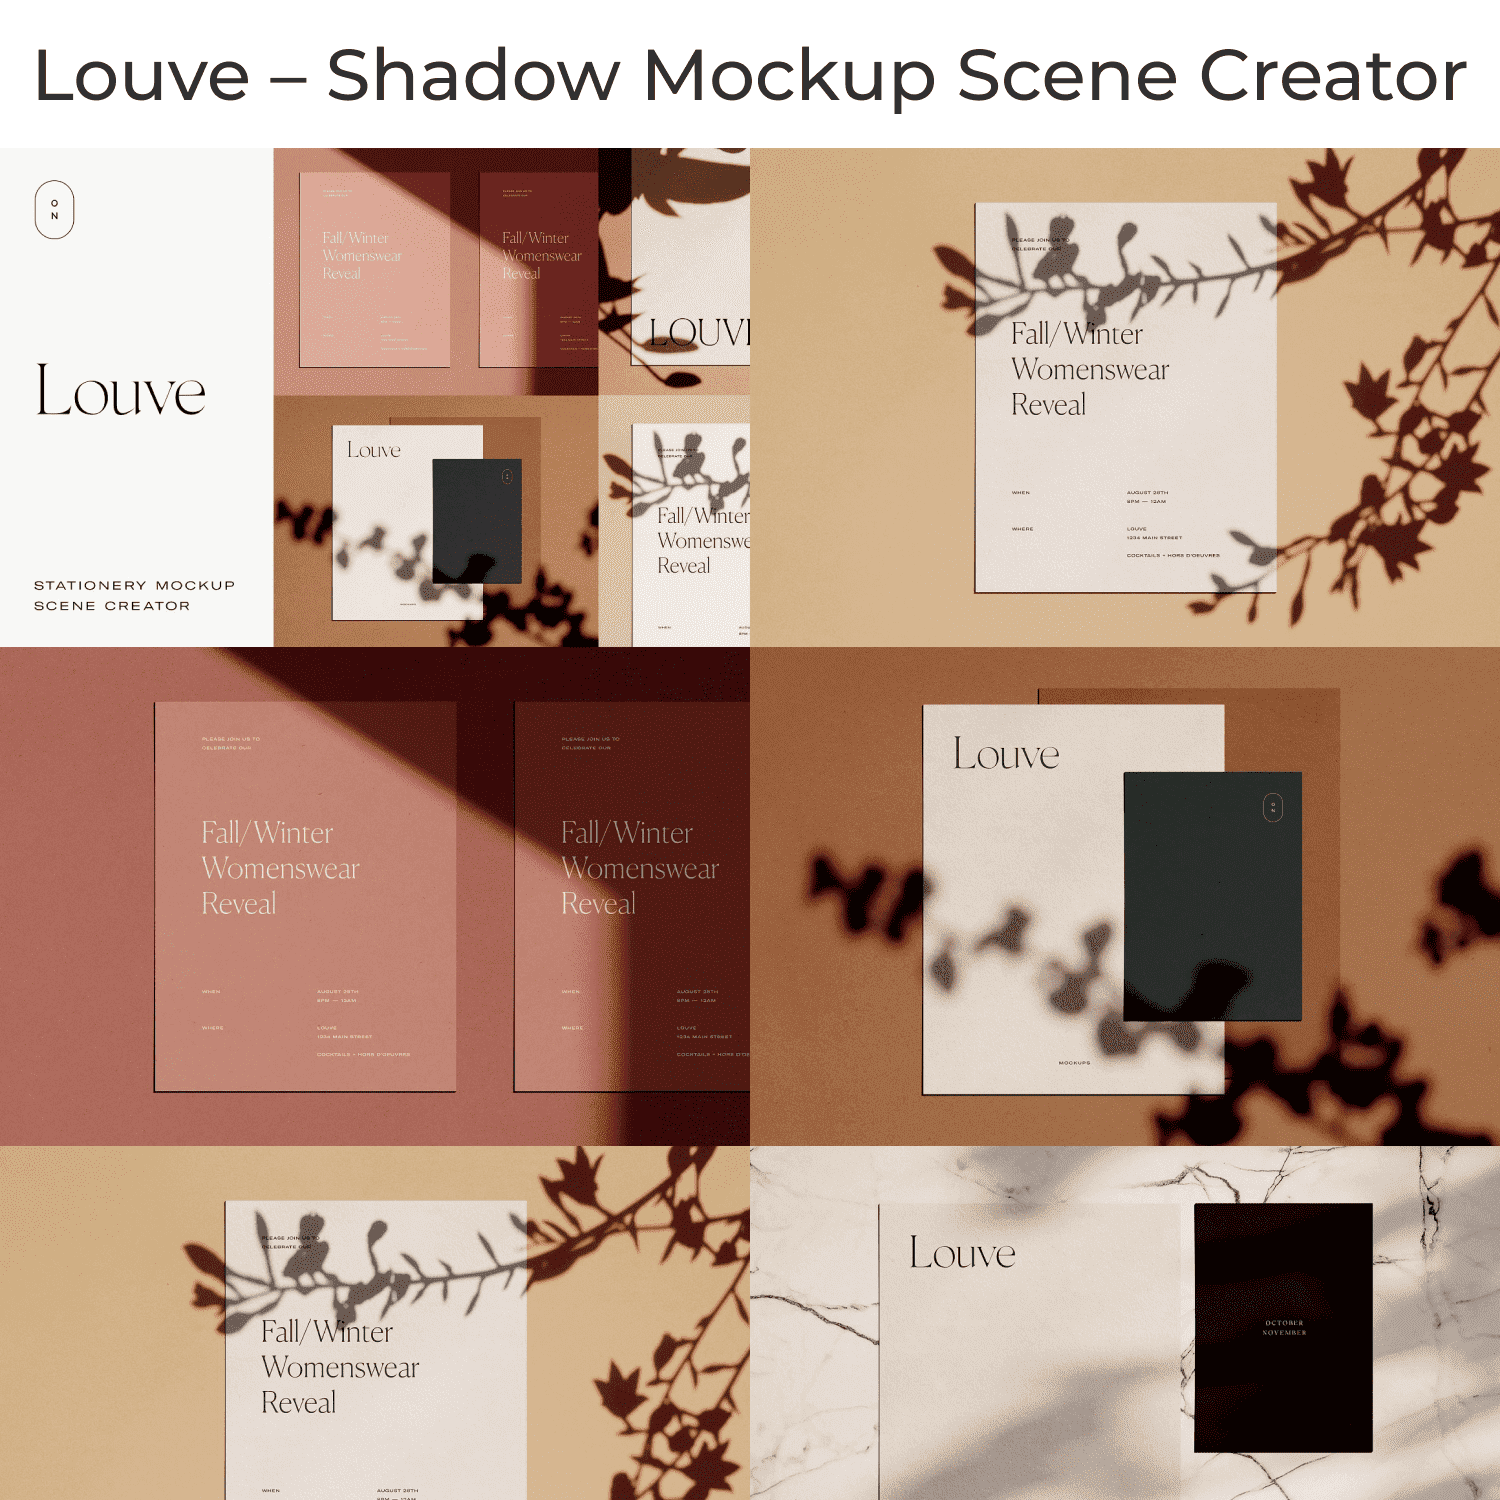 Louve - Shadow Mockup Scene Creator - "Stationery Mockup Scene Creator".